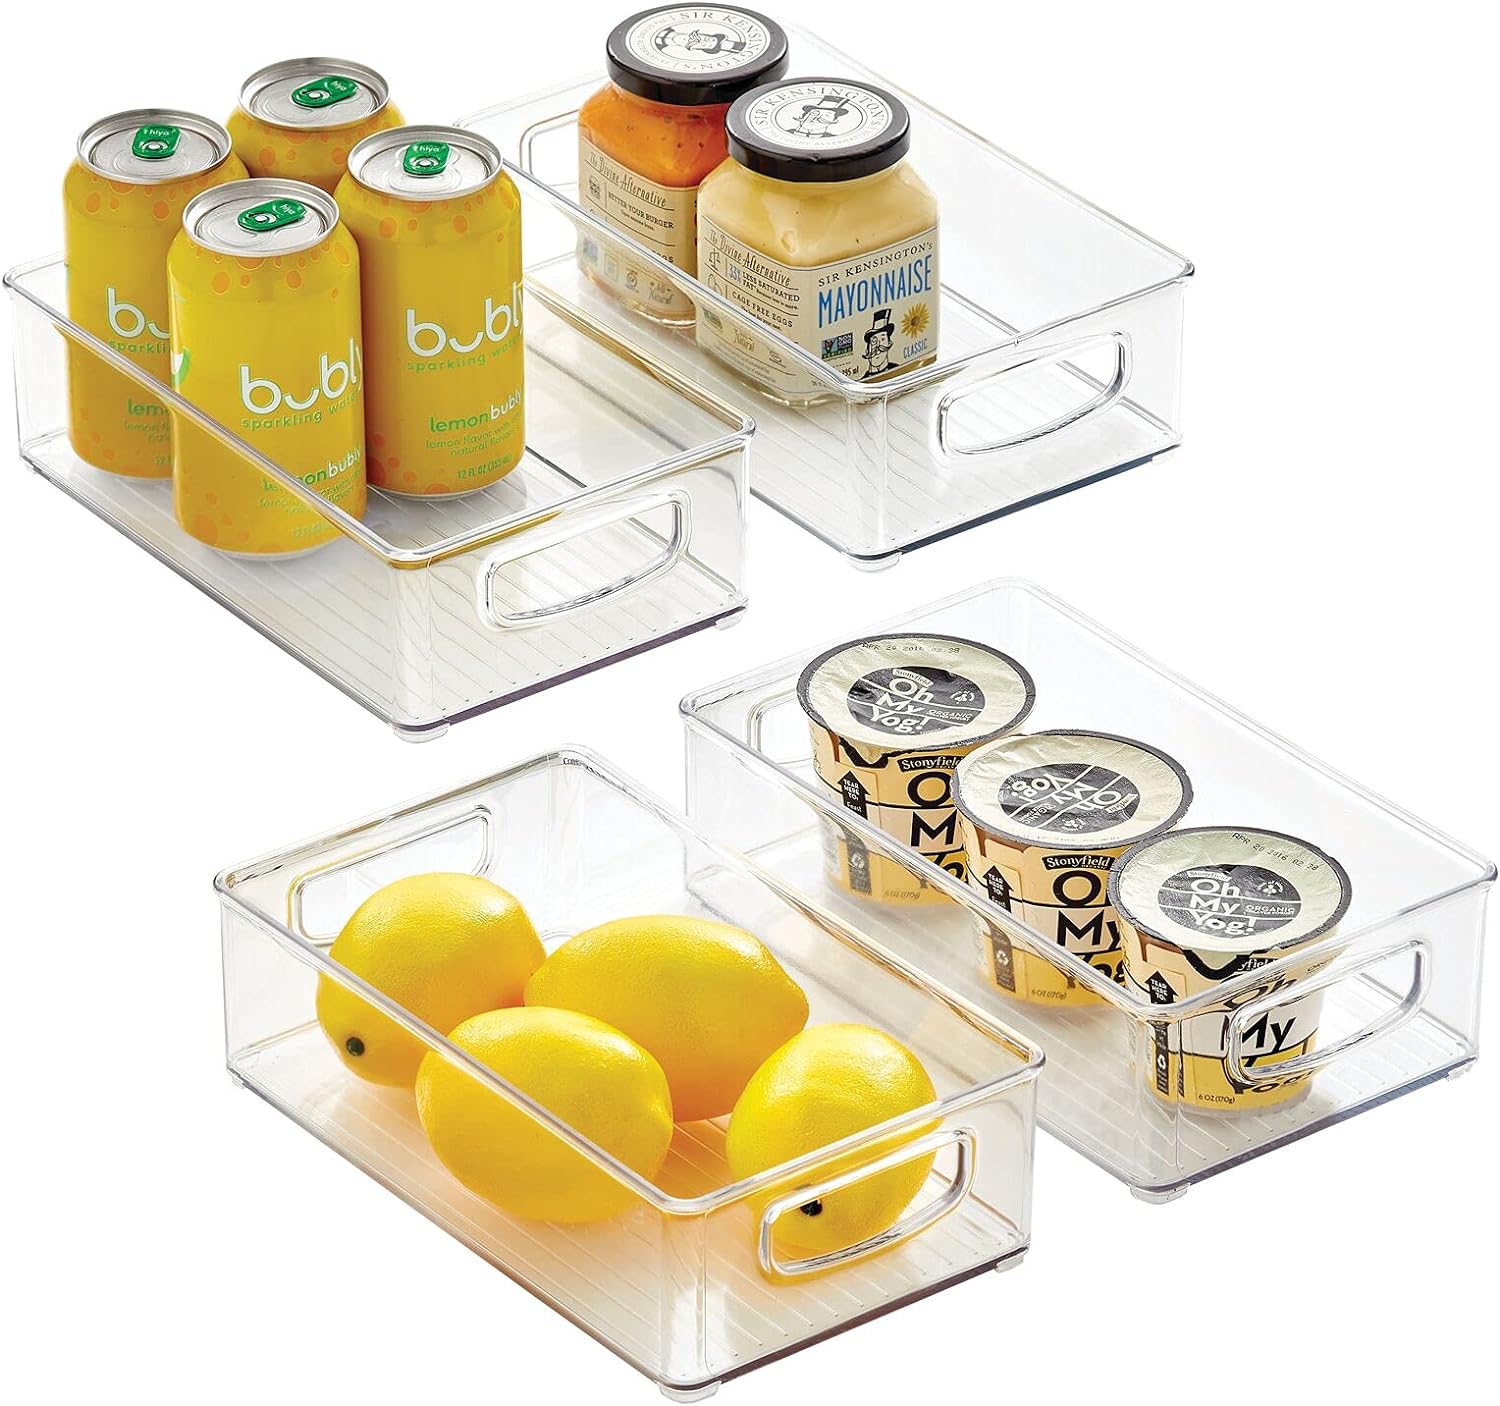 mDesign Plastic Kitchen Pantry Cabinet, Refrigerator or Freezer Food Storage Bins with Handles - Organizer for Fruit, Yogurt, Snacks, Pasta - Food Safe, BPA Free, 10 Long - 4 Pack, Clear